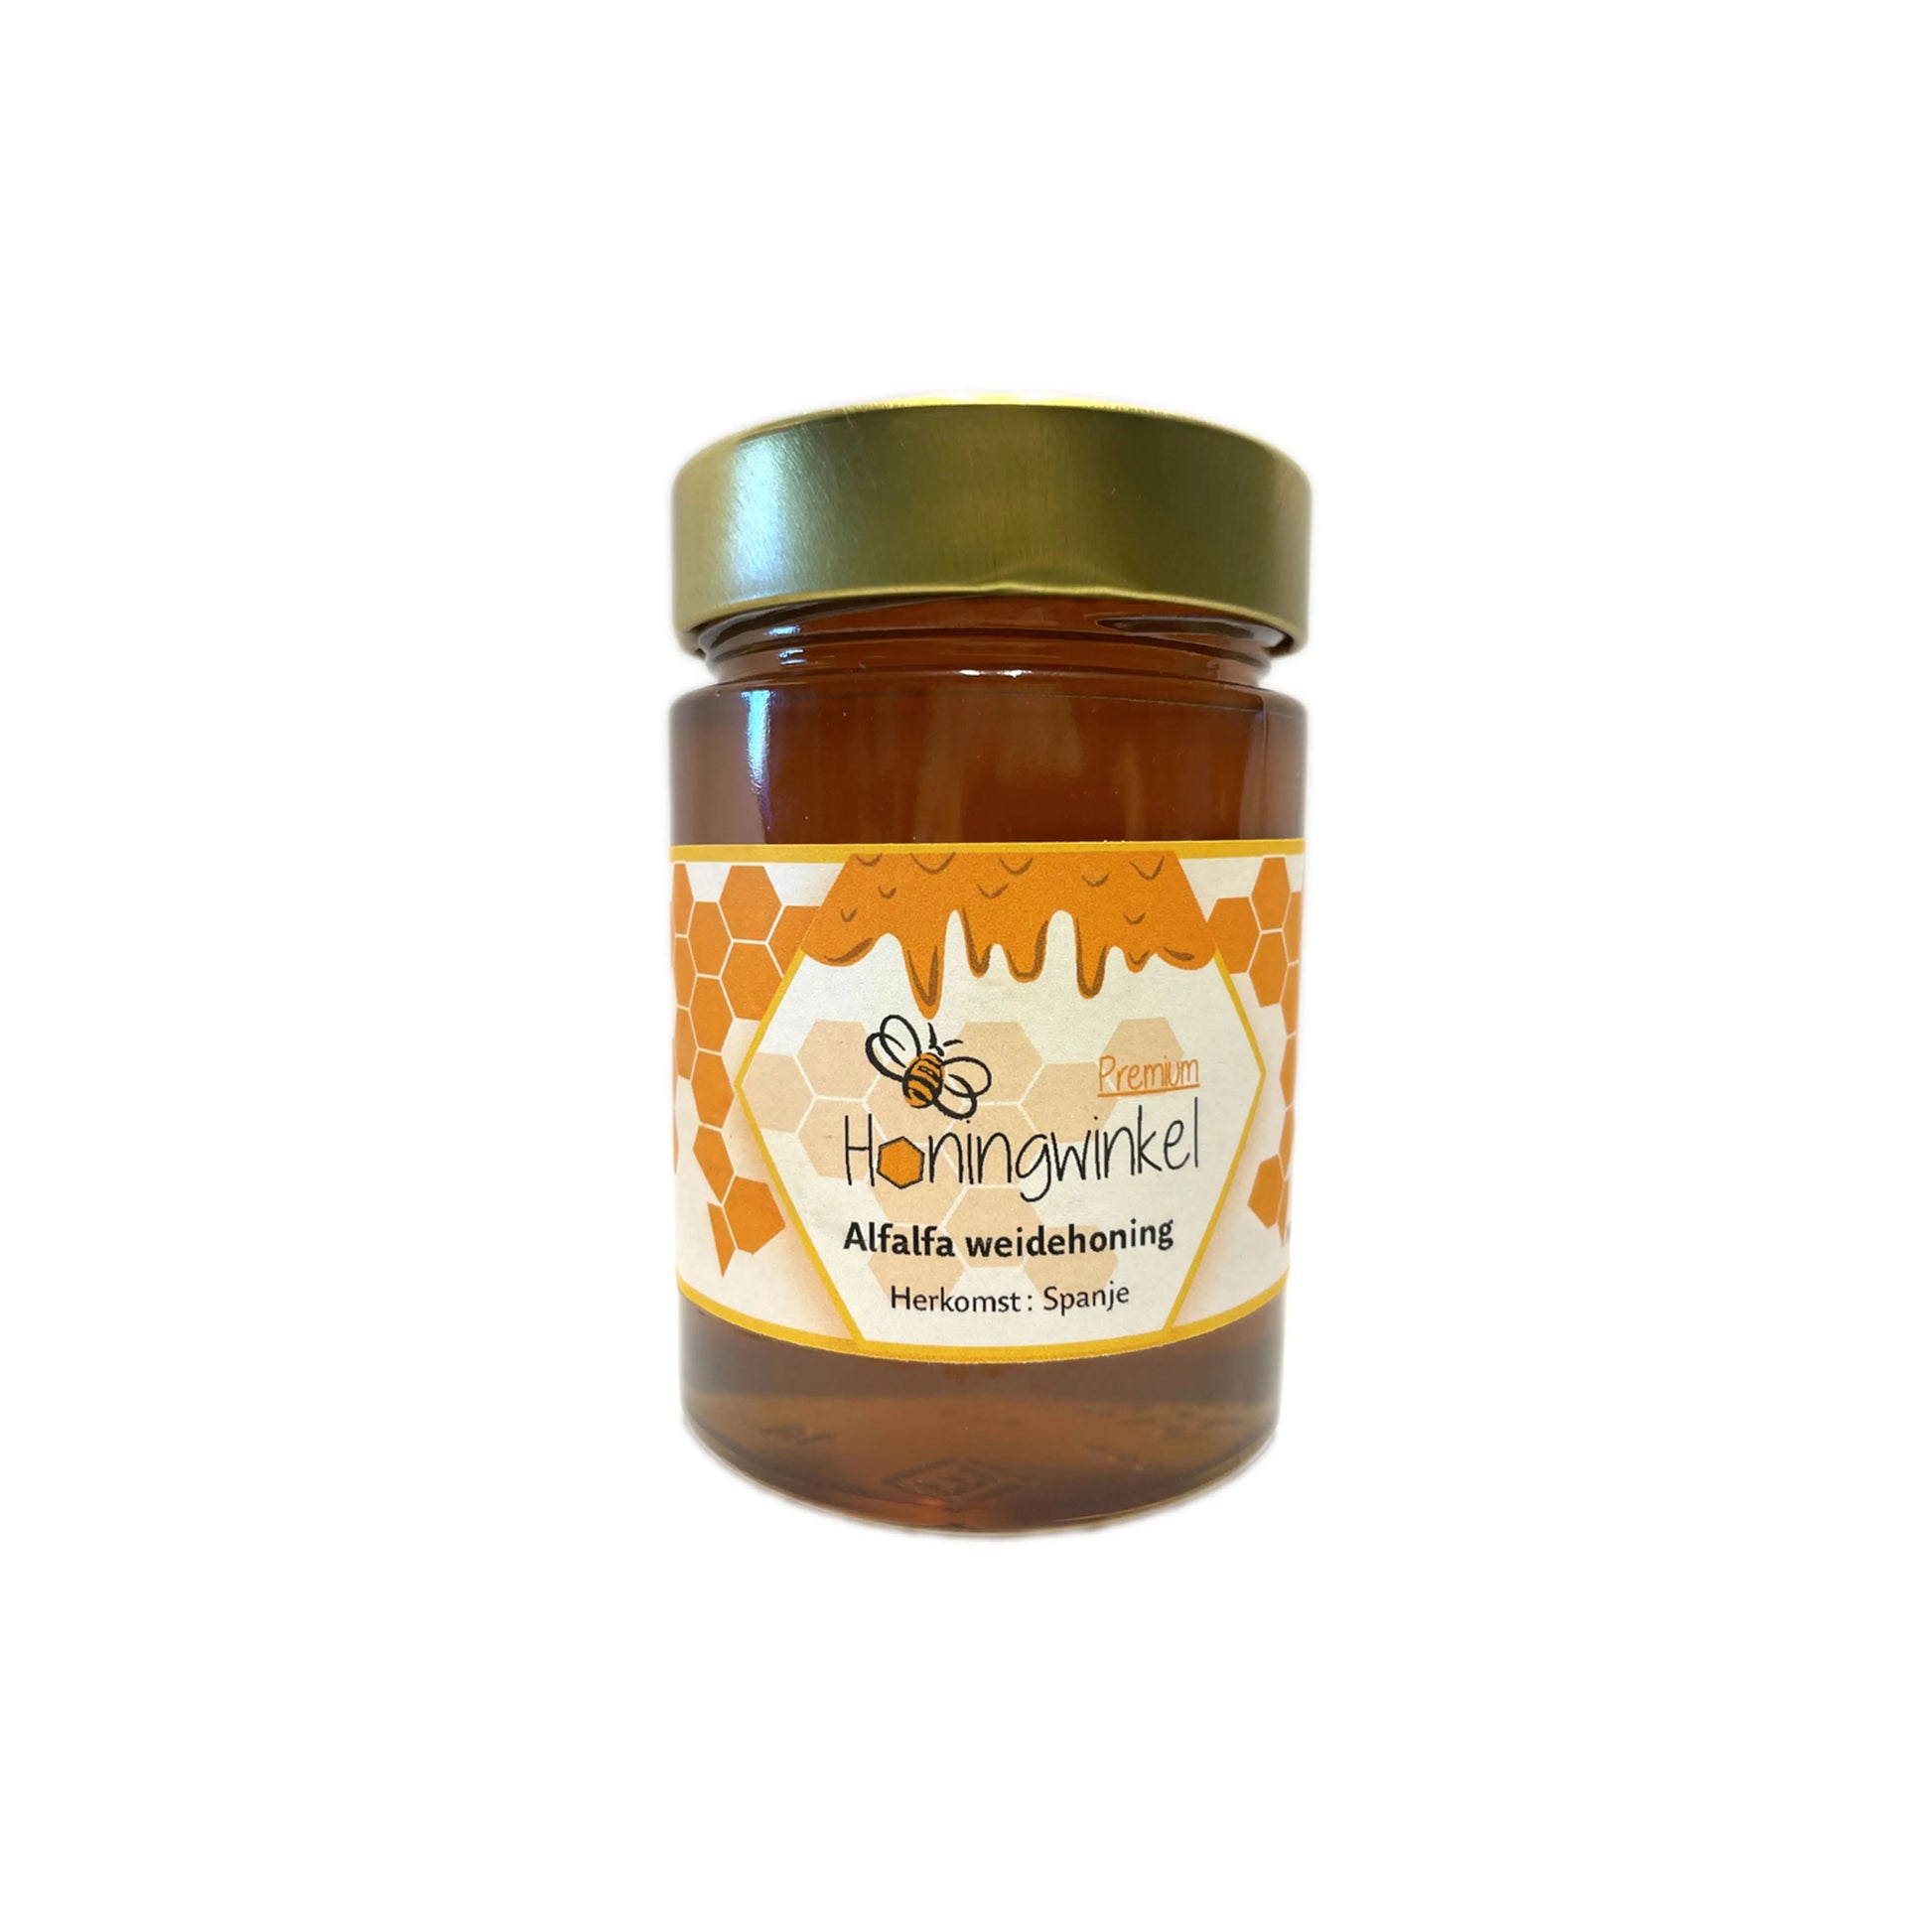 Premium alfalfa weidehoning Spanje 450g Honingwinkel (vloeibaar) - Honingwinkel